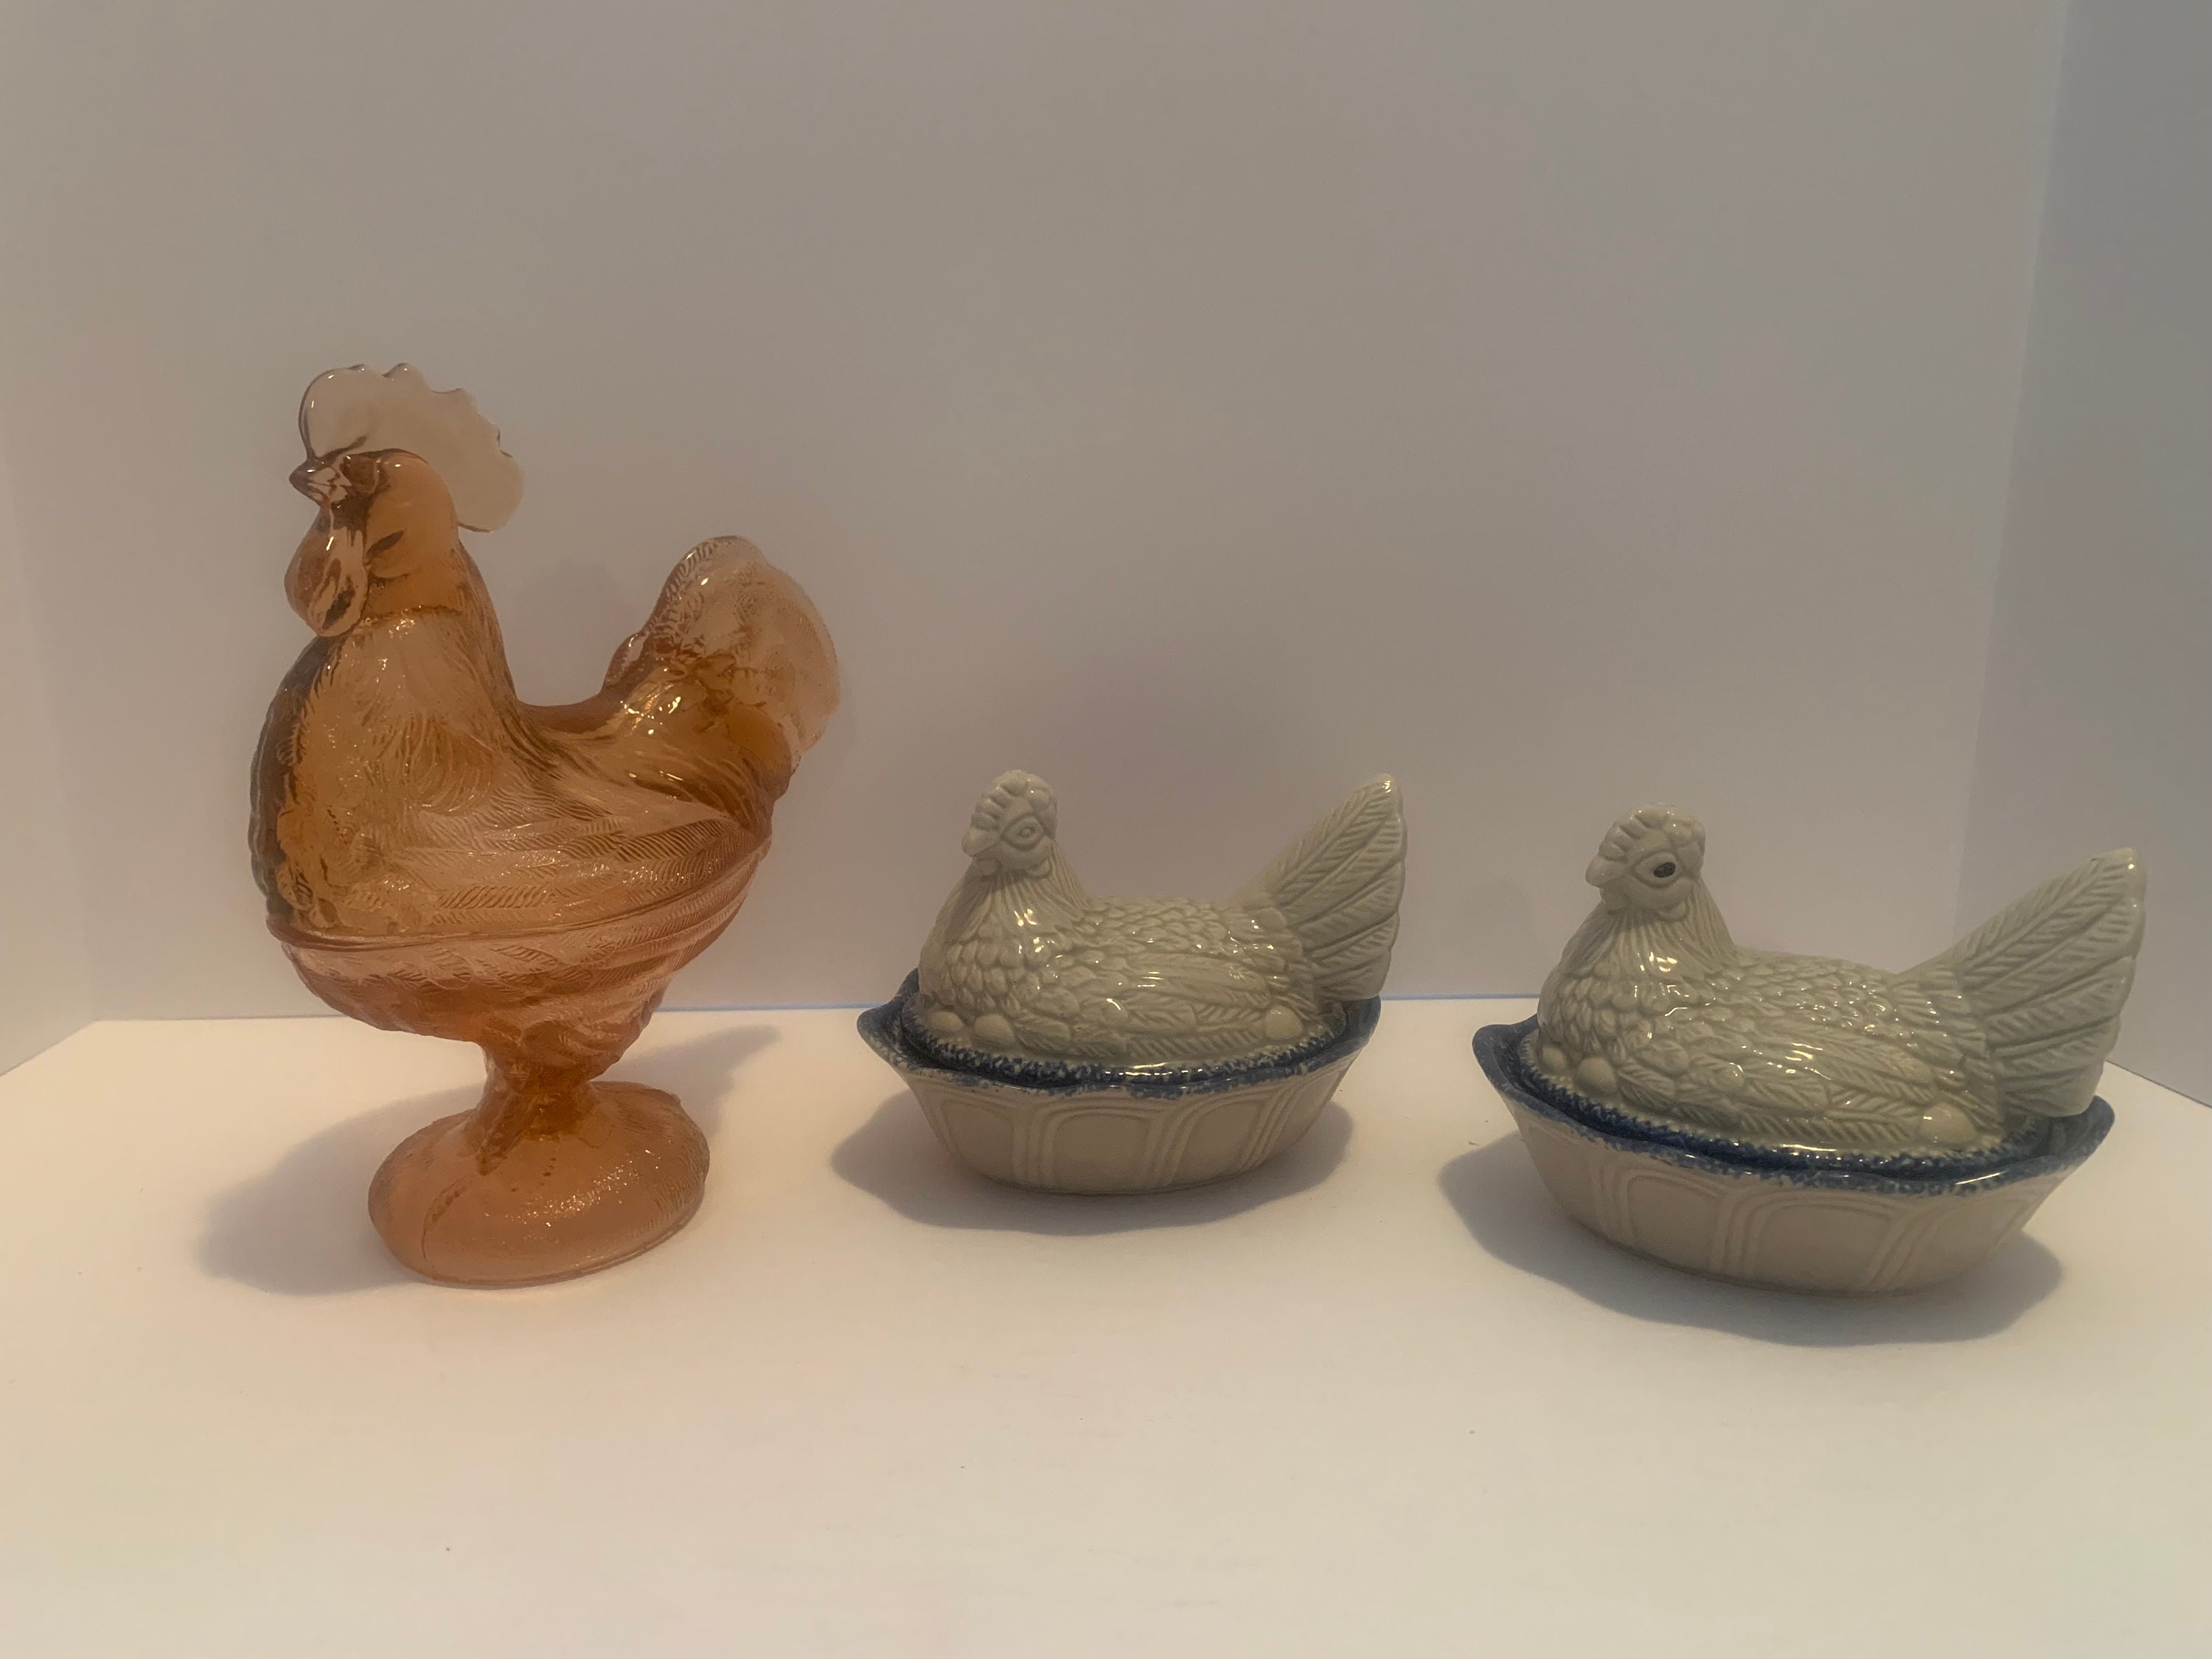 Ceramic Chicken, Egg Holder, Portuguese Pottery, French Hen, Majolica,  Vintage Kitchen, Retro Kitchen, Kitchenalia, Denmead Chicken, Farming 